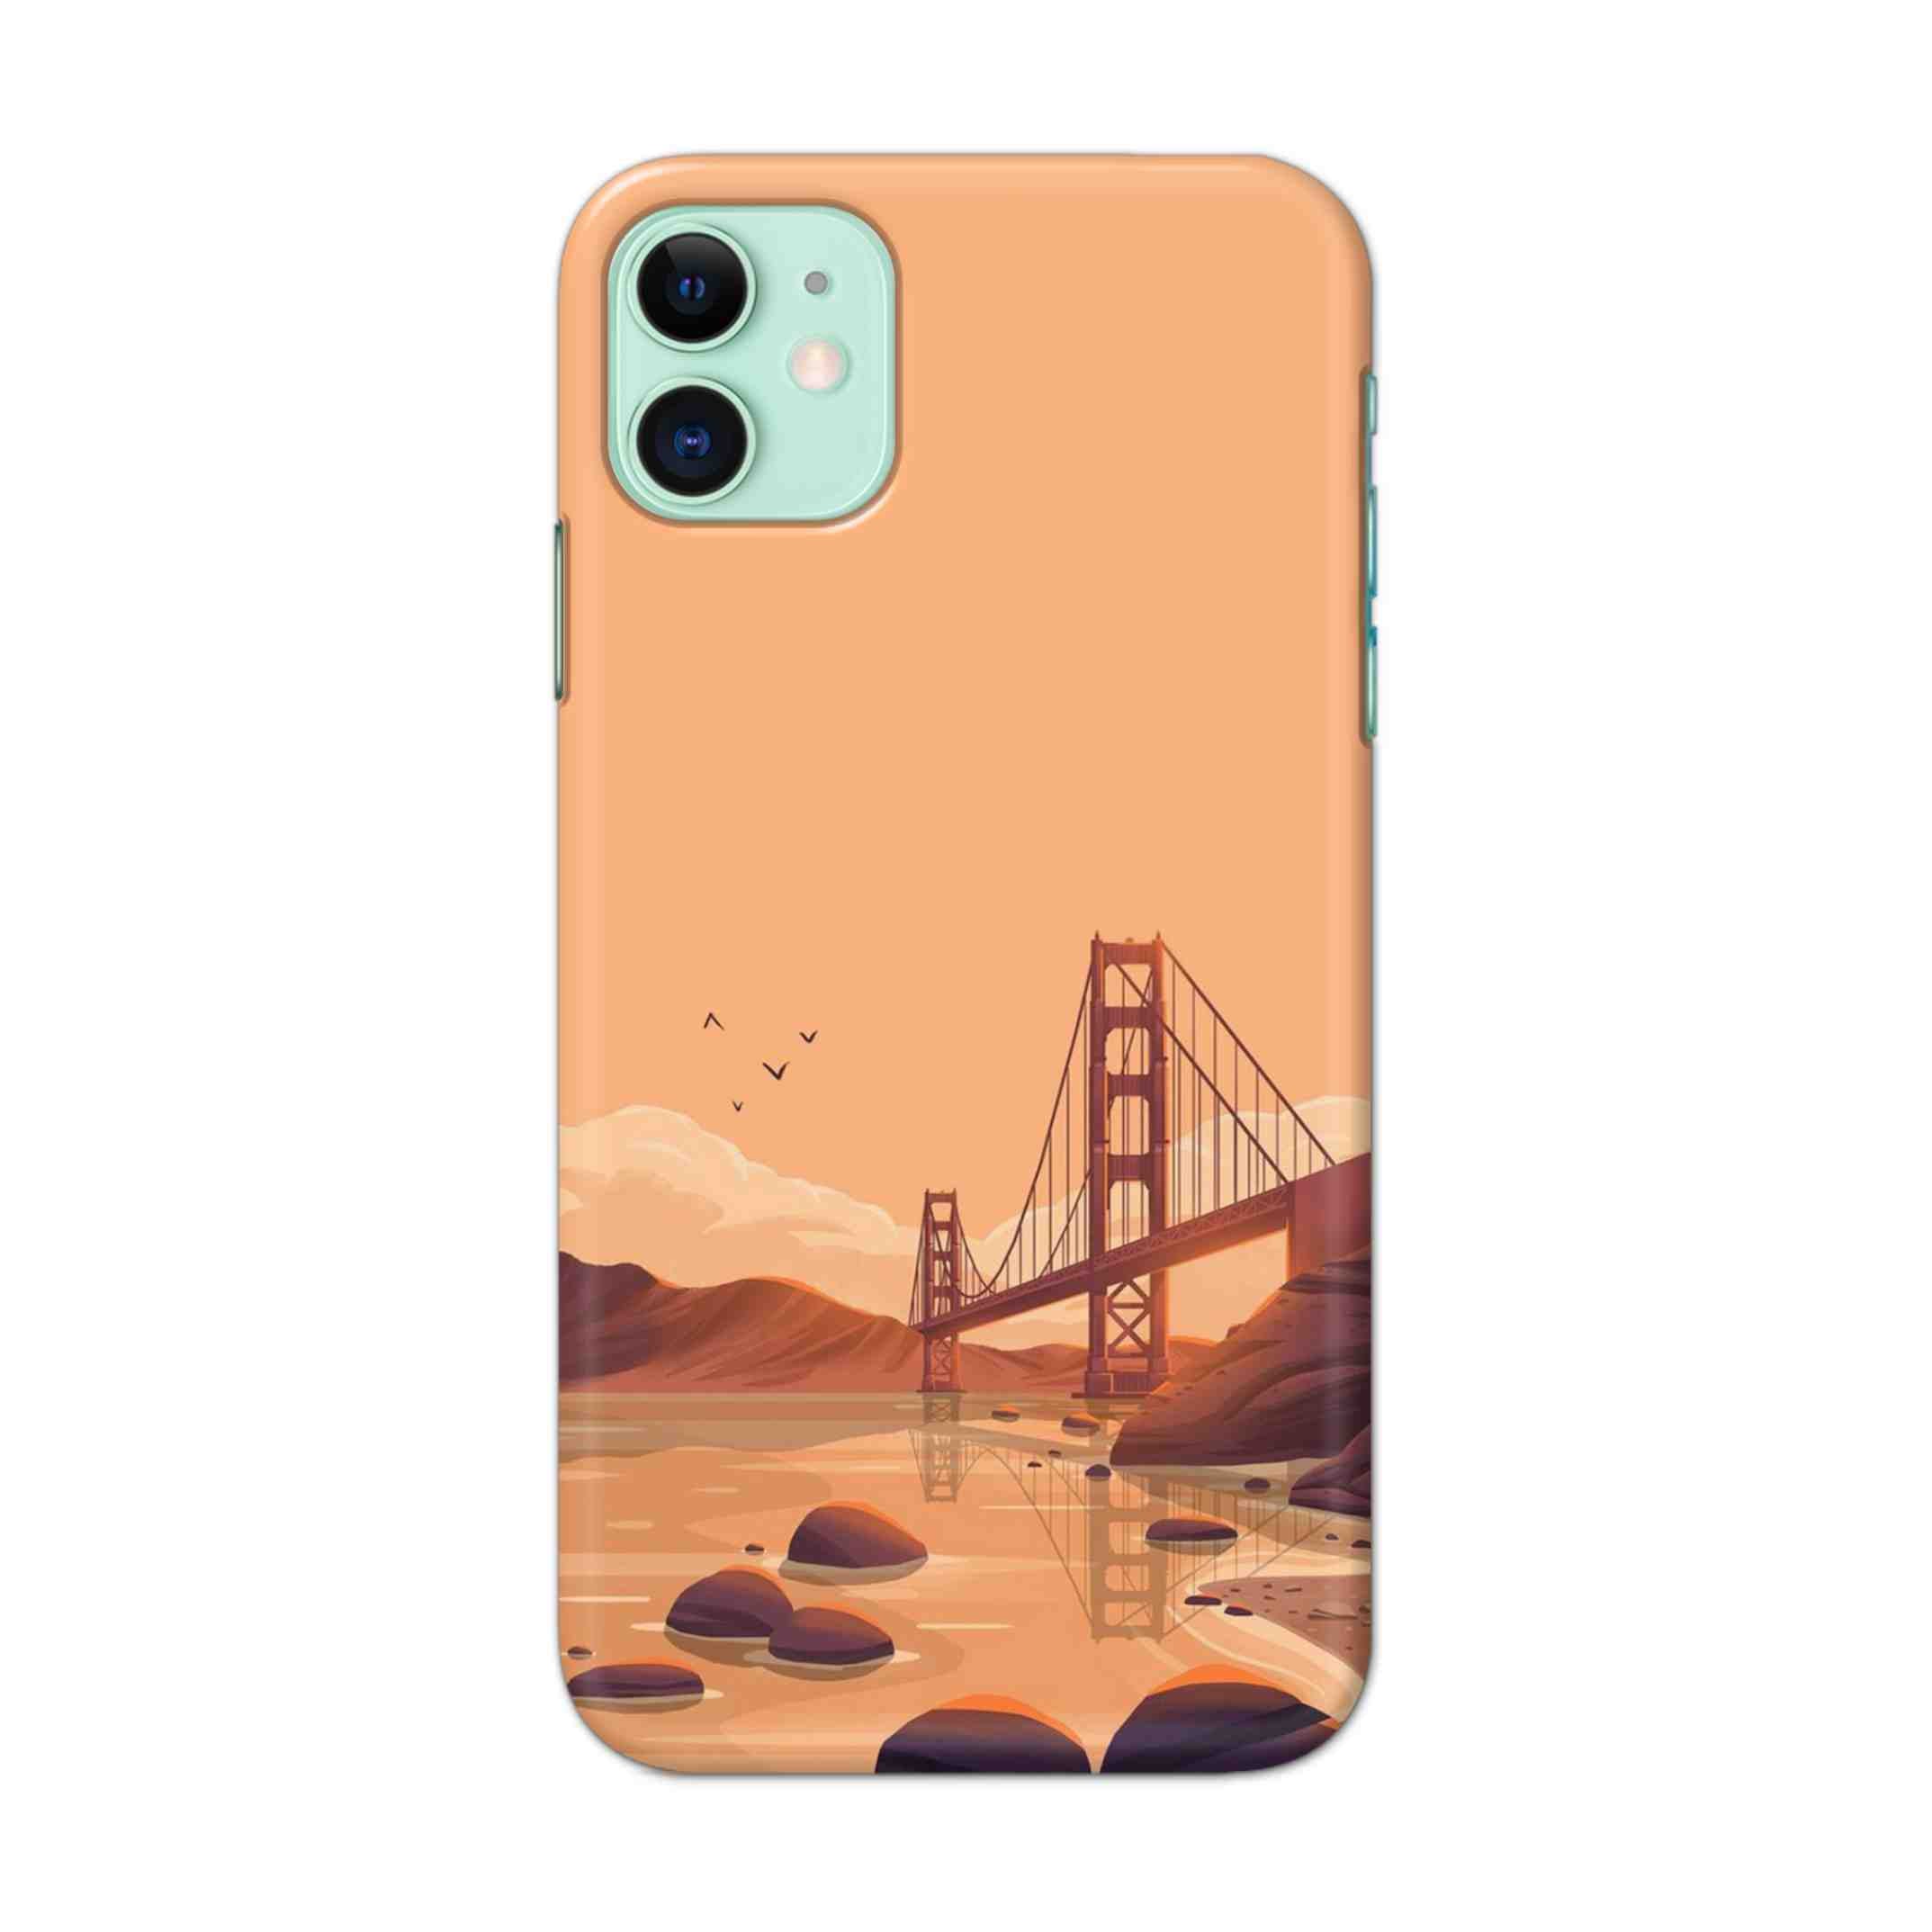 Buy San Fransisco Hard Back Mobile Phone Case/Cover For iPhone 11 Online